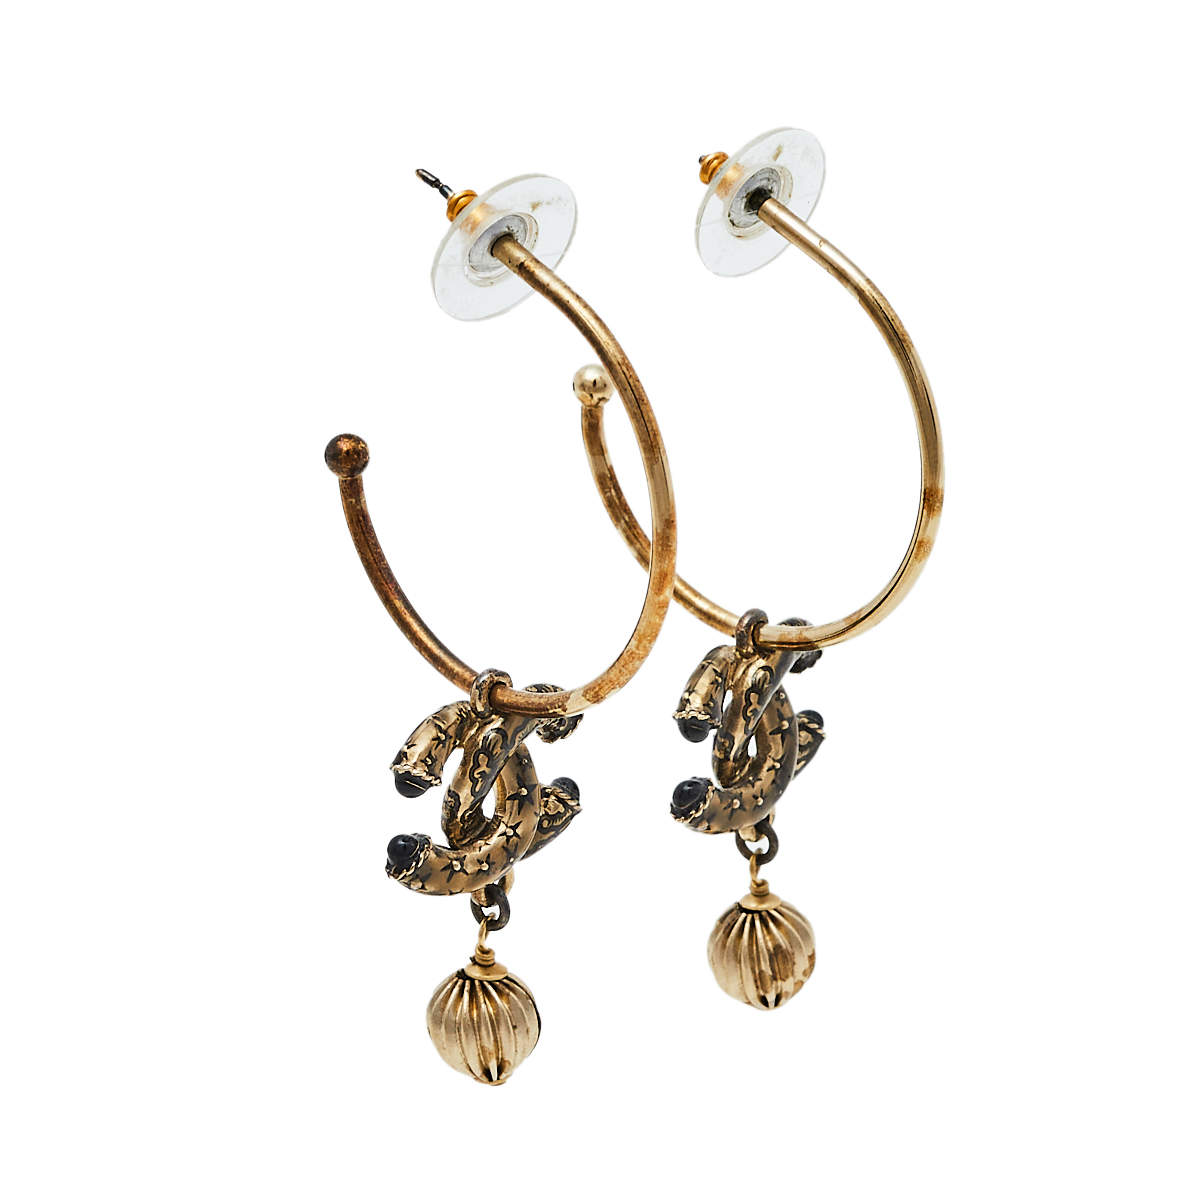 Chanel hoop earrings